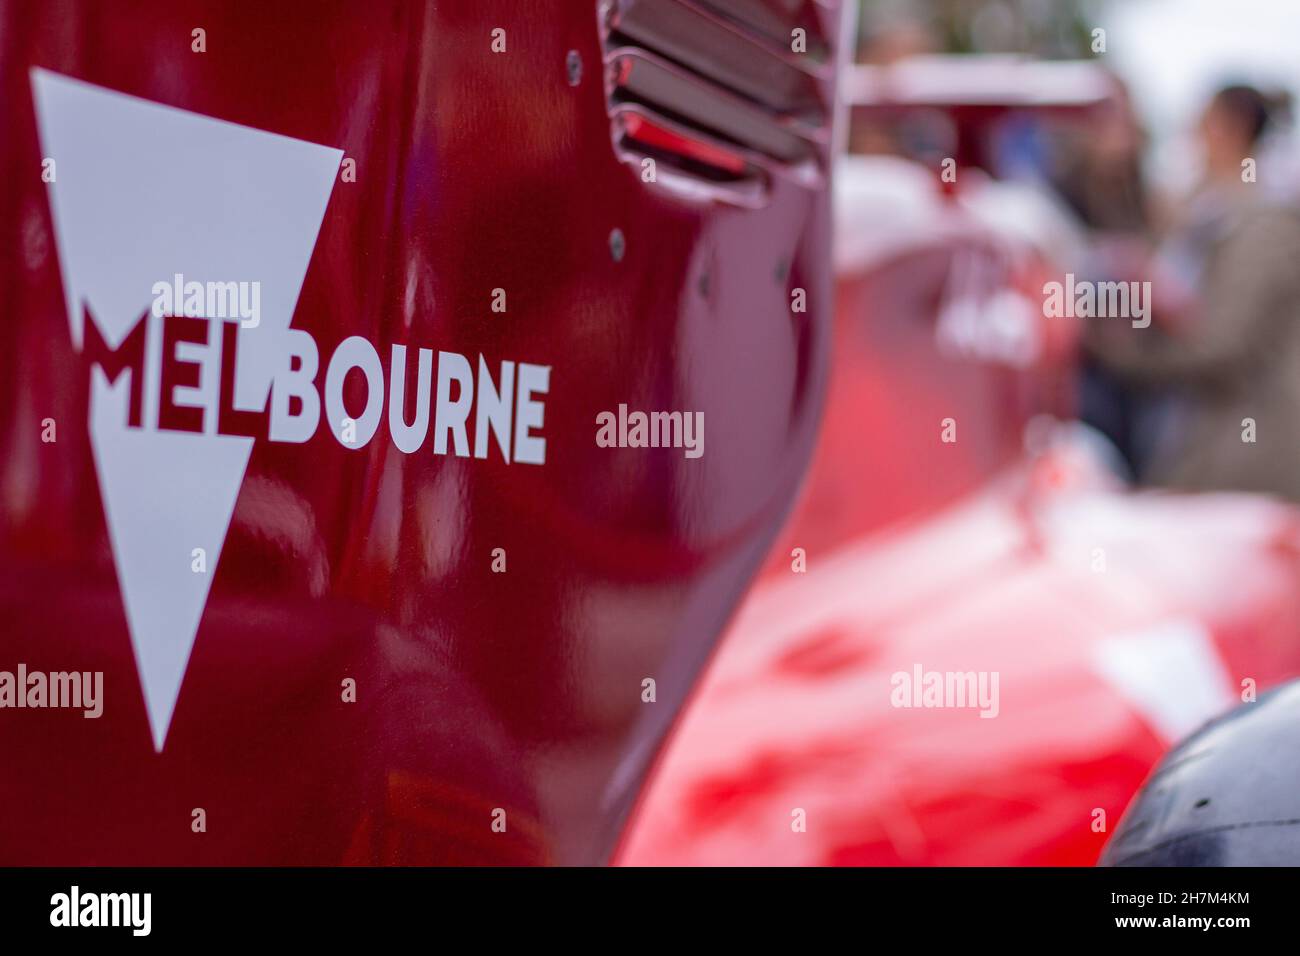 Melbourne Car show Father's day. Melbourne Formula 1 exhibition car. St Kilda, Victoria,  Australia - September 2nd, 2018. Stock Photo